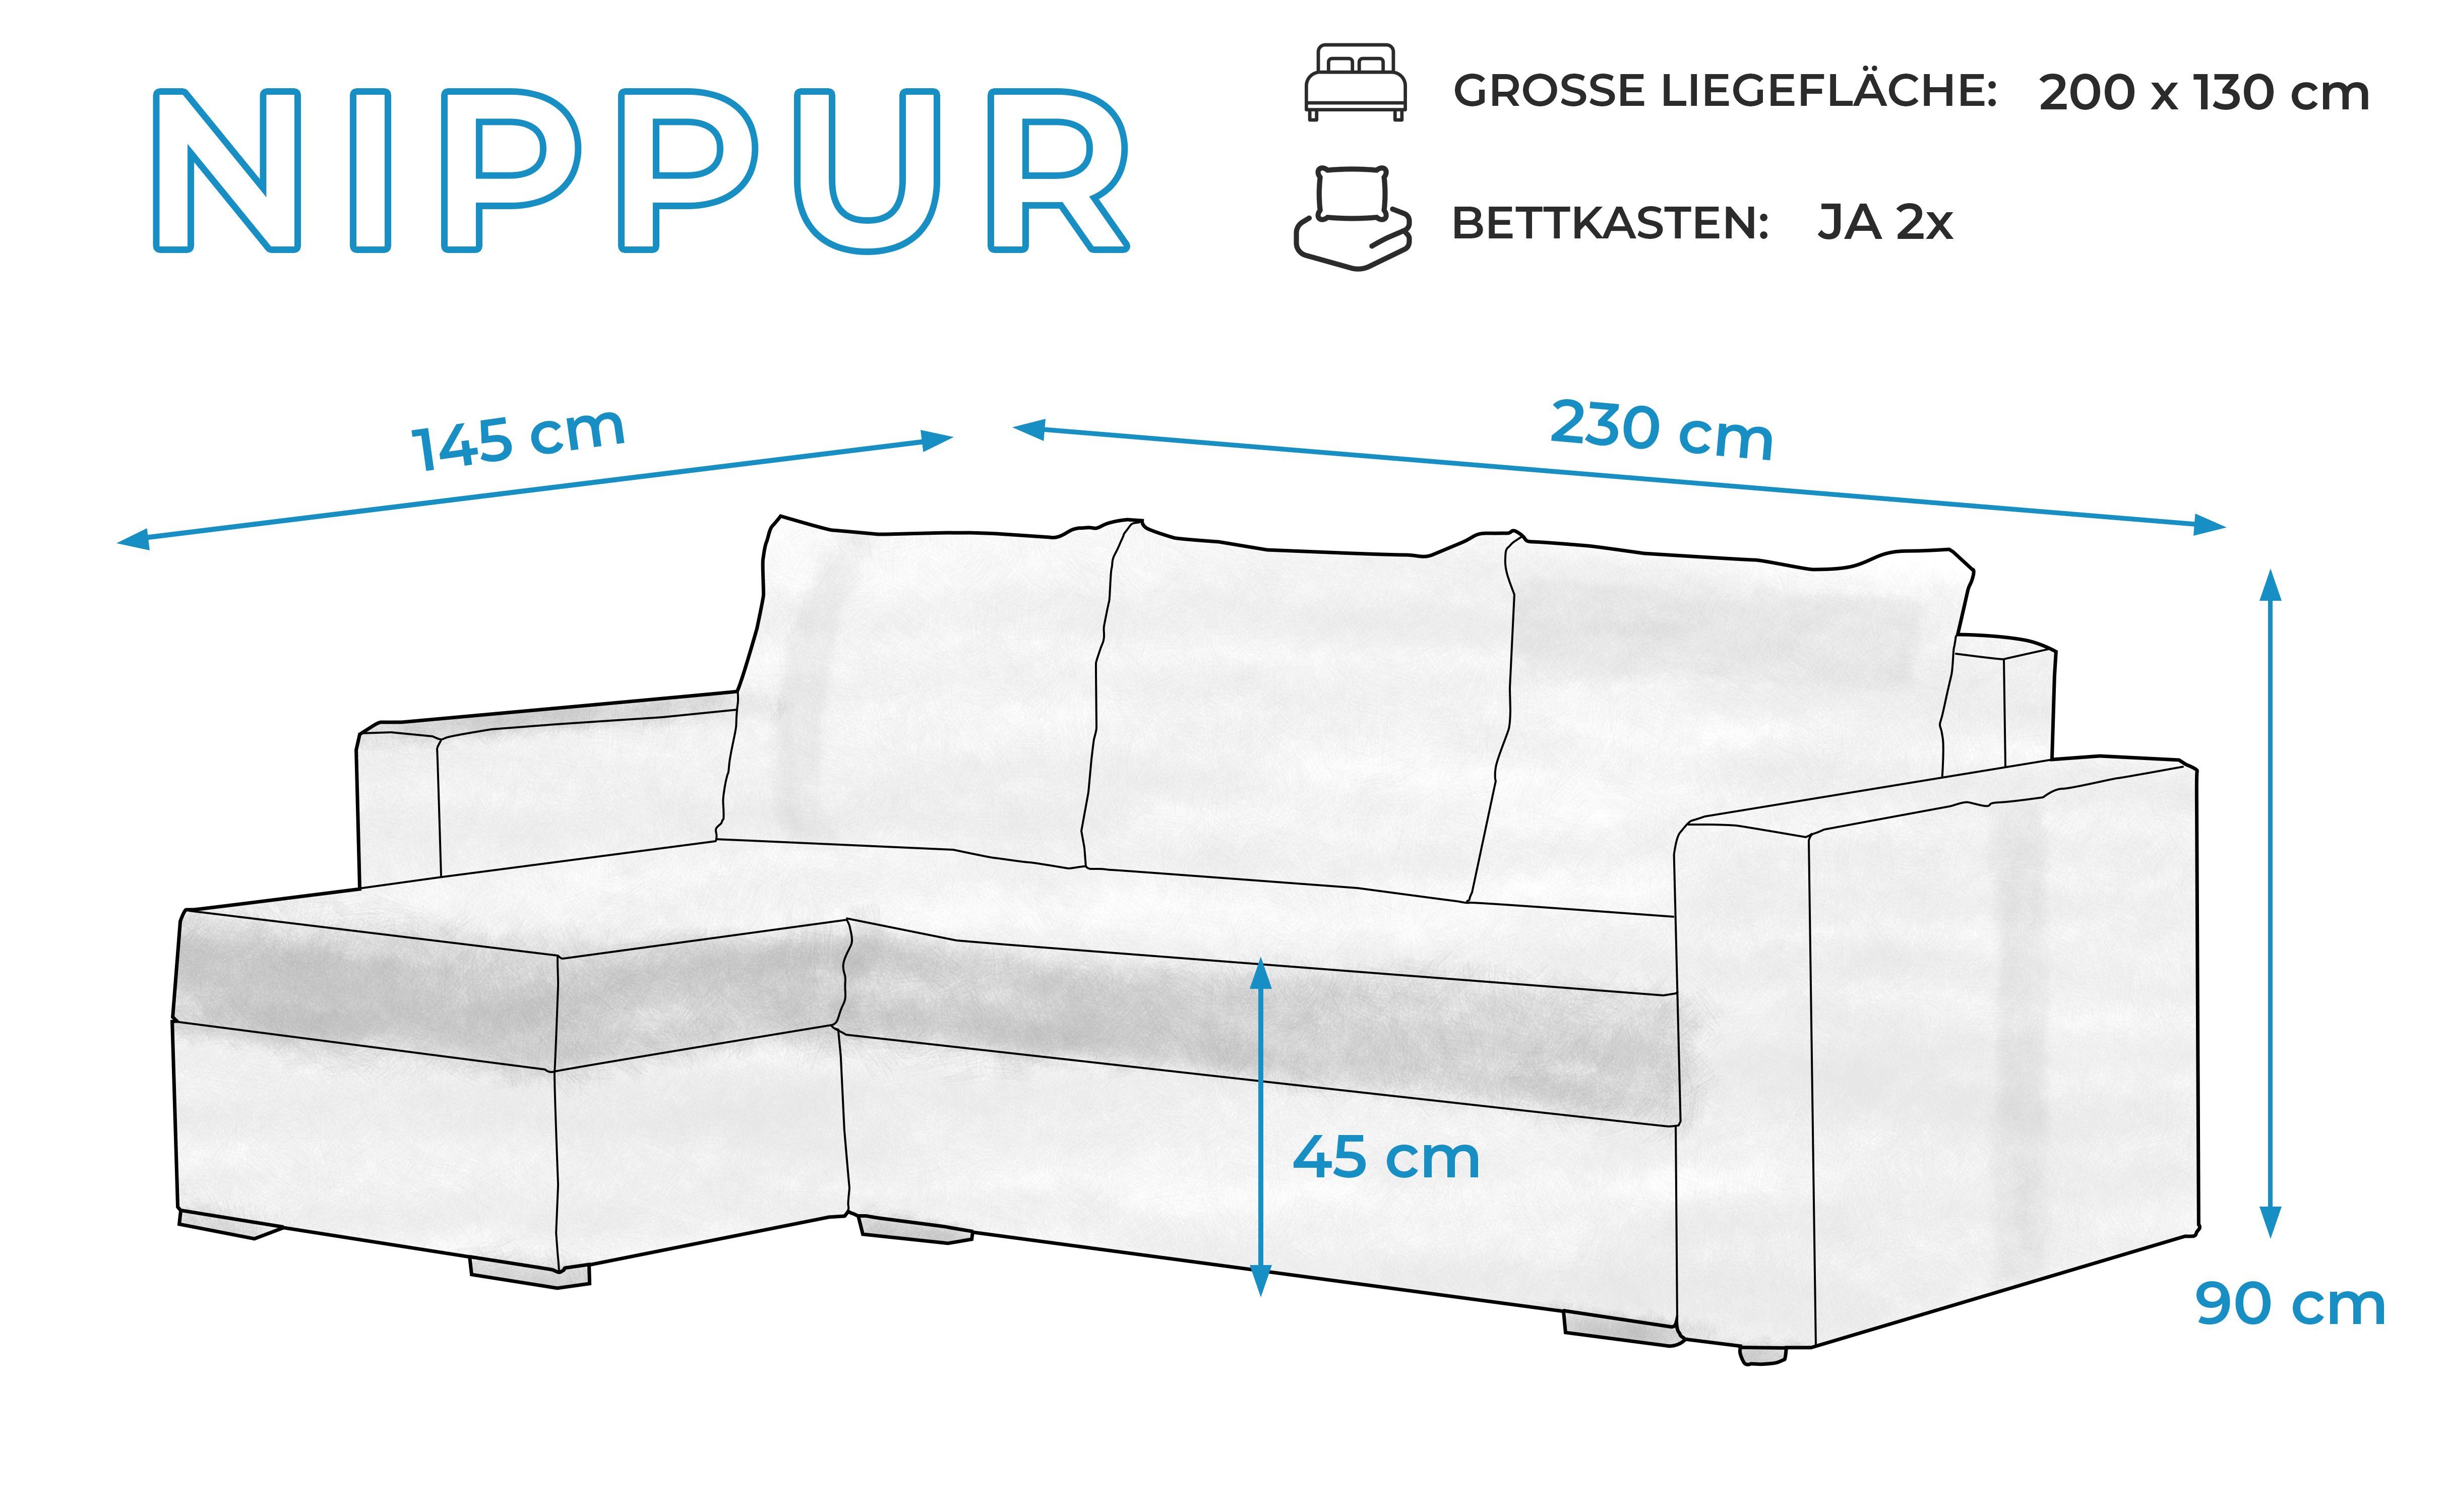 x 2x B230 Furnix L-Form Polstercouch H90 T145 Sofa 45 in NIPPUR mit Weiß/Blau Bettkasten, cm, Schlafsofa x DL-Ausziehautomatik, Sitzhöhe: Maße: Schlaffunktion, BH16+SF17 cm